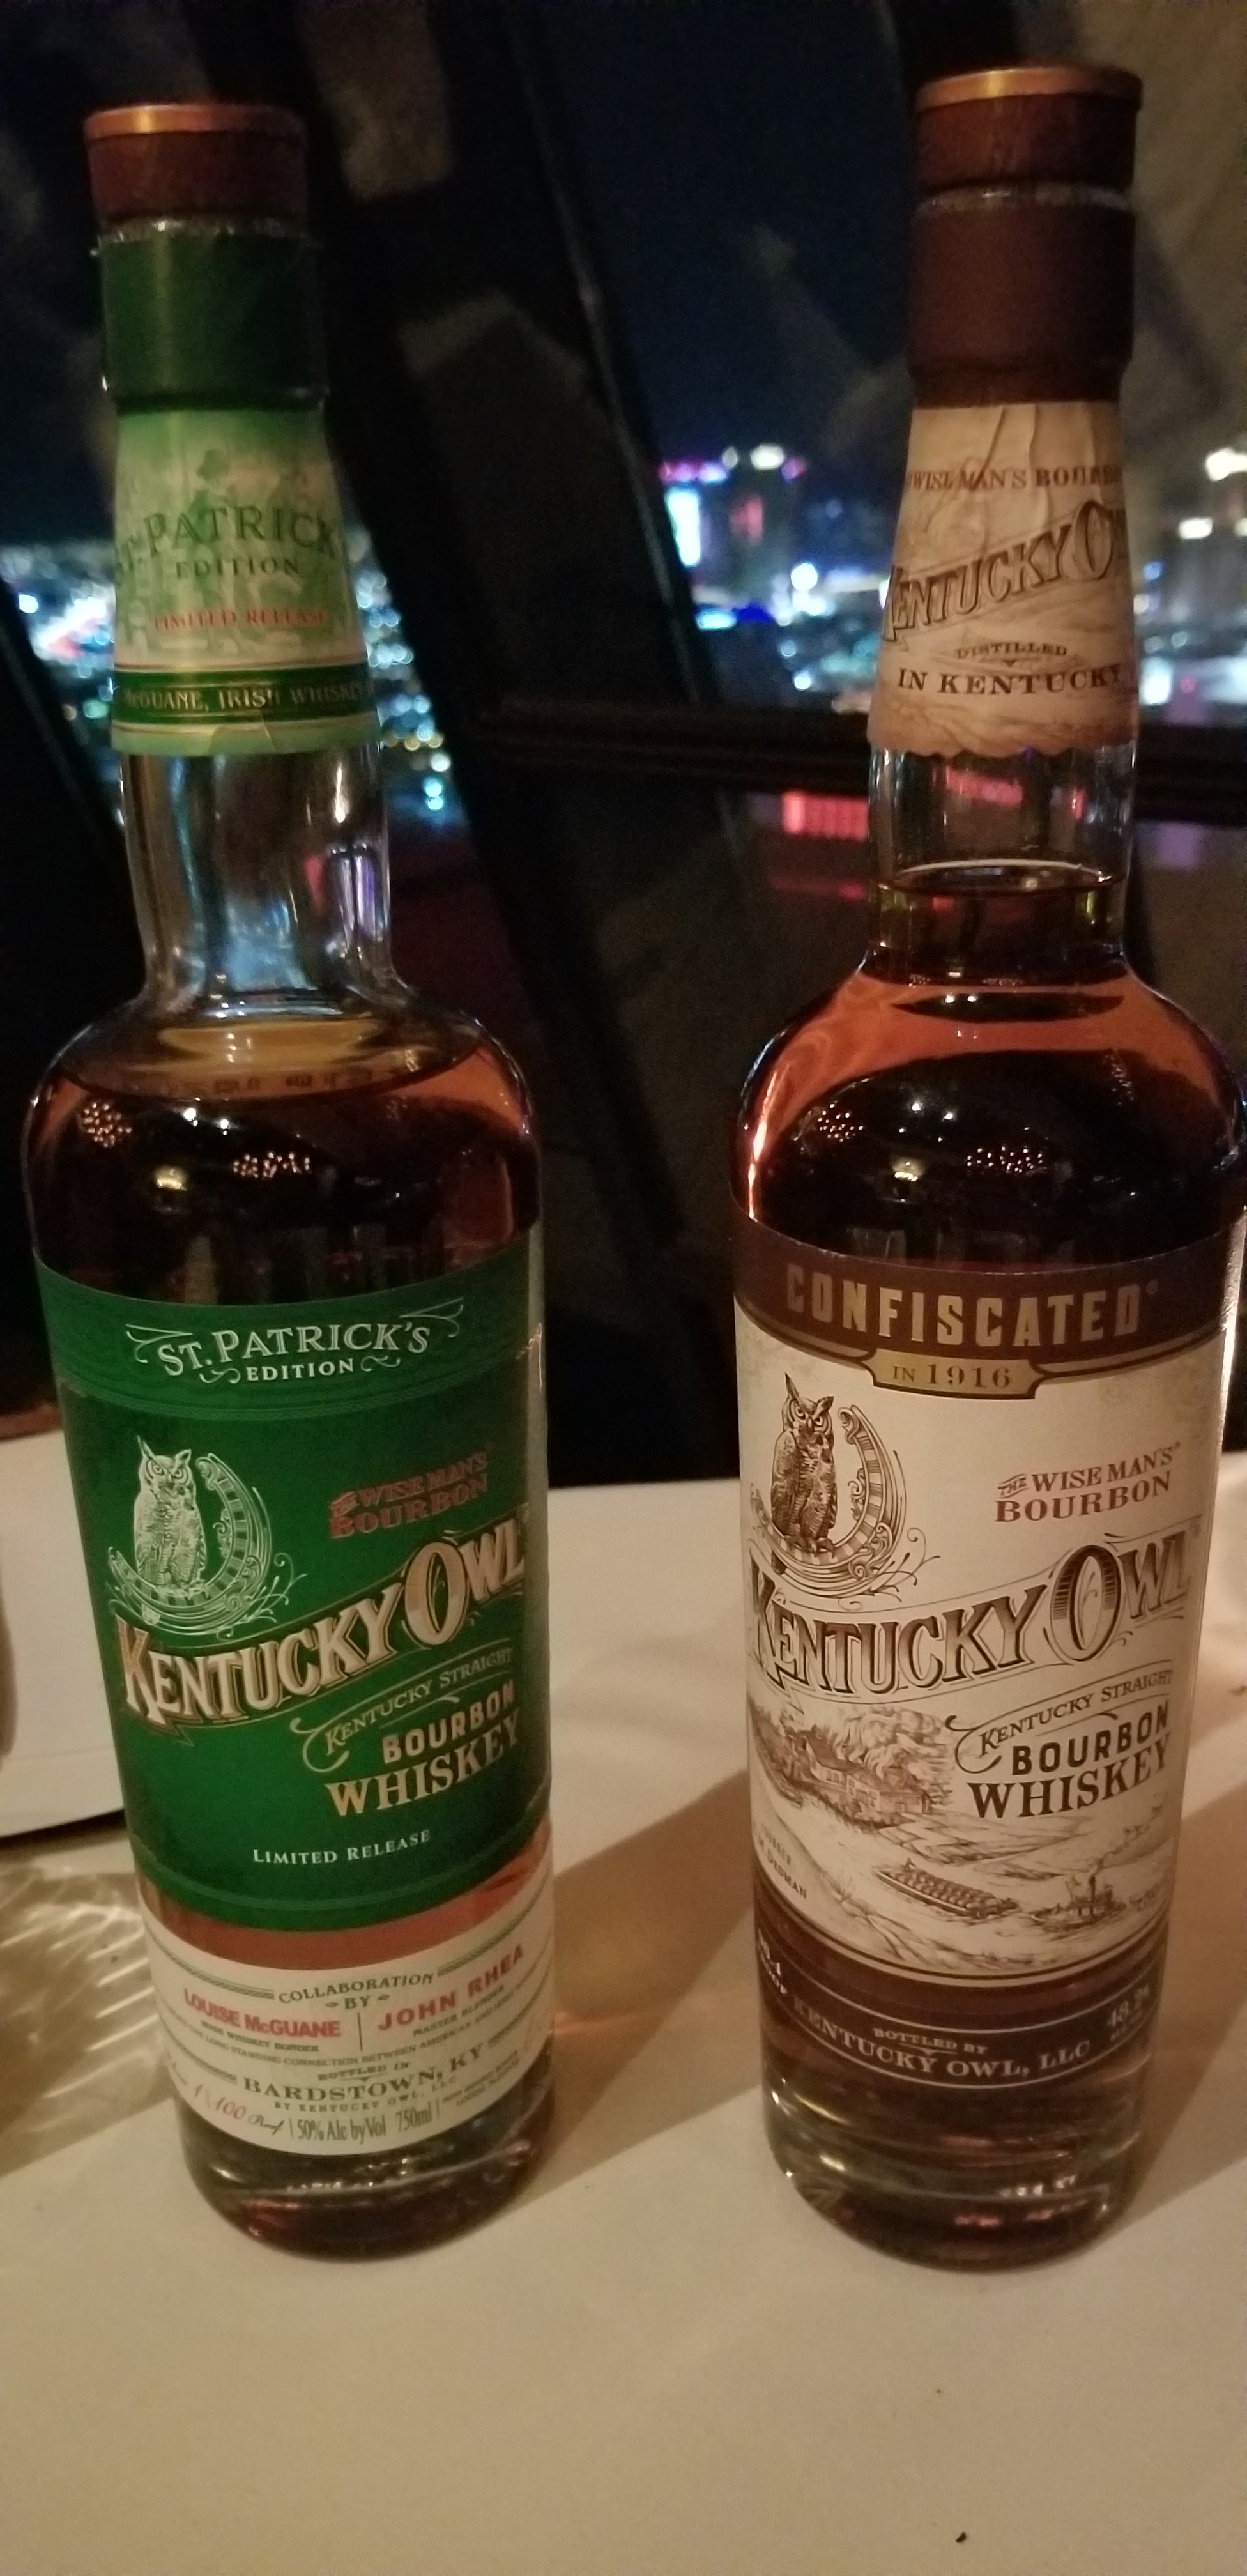 Kentucky Owl Bourbon bottles at Vetri Cucina